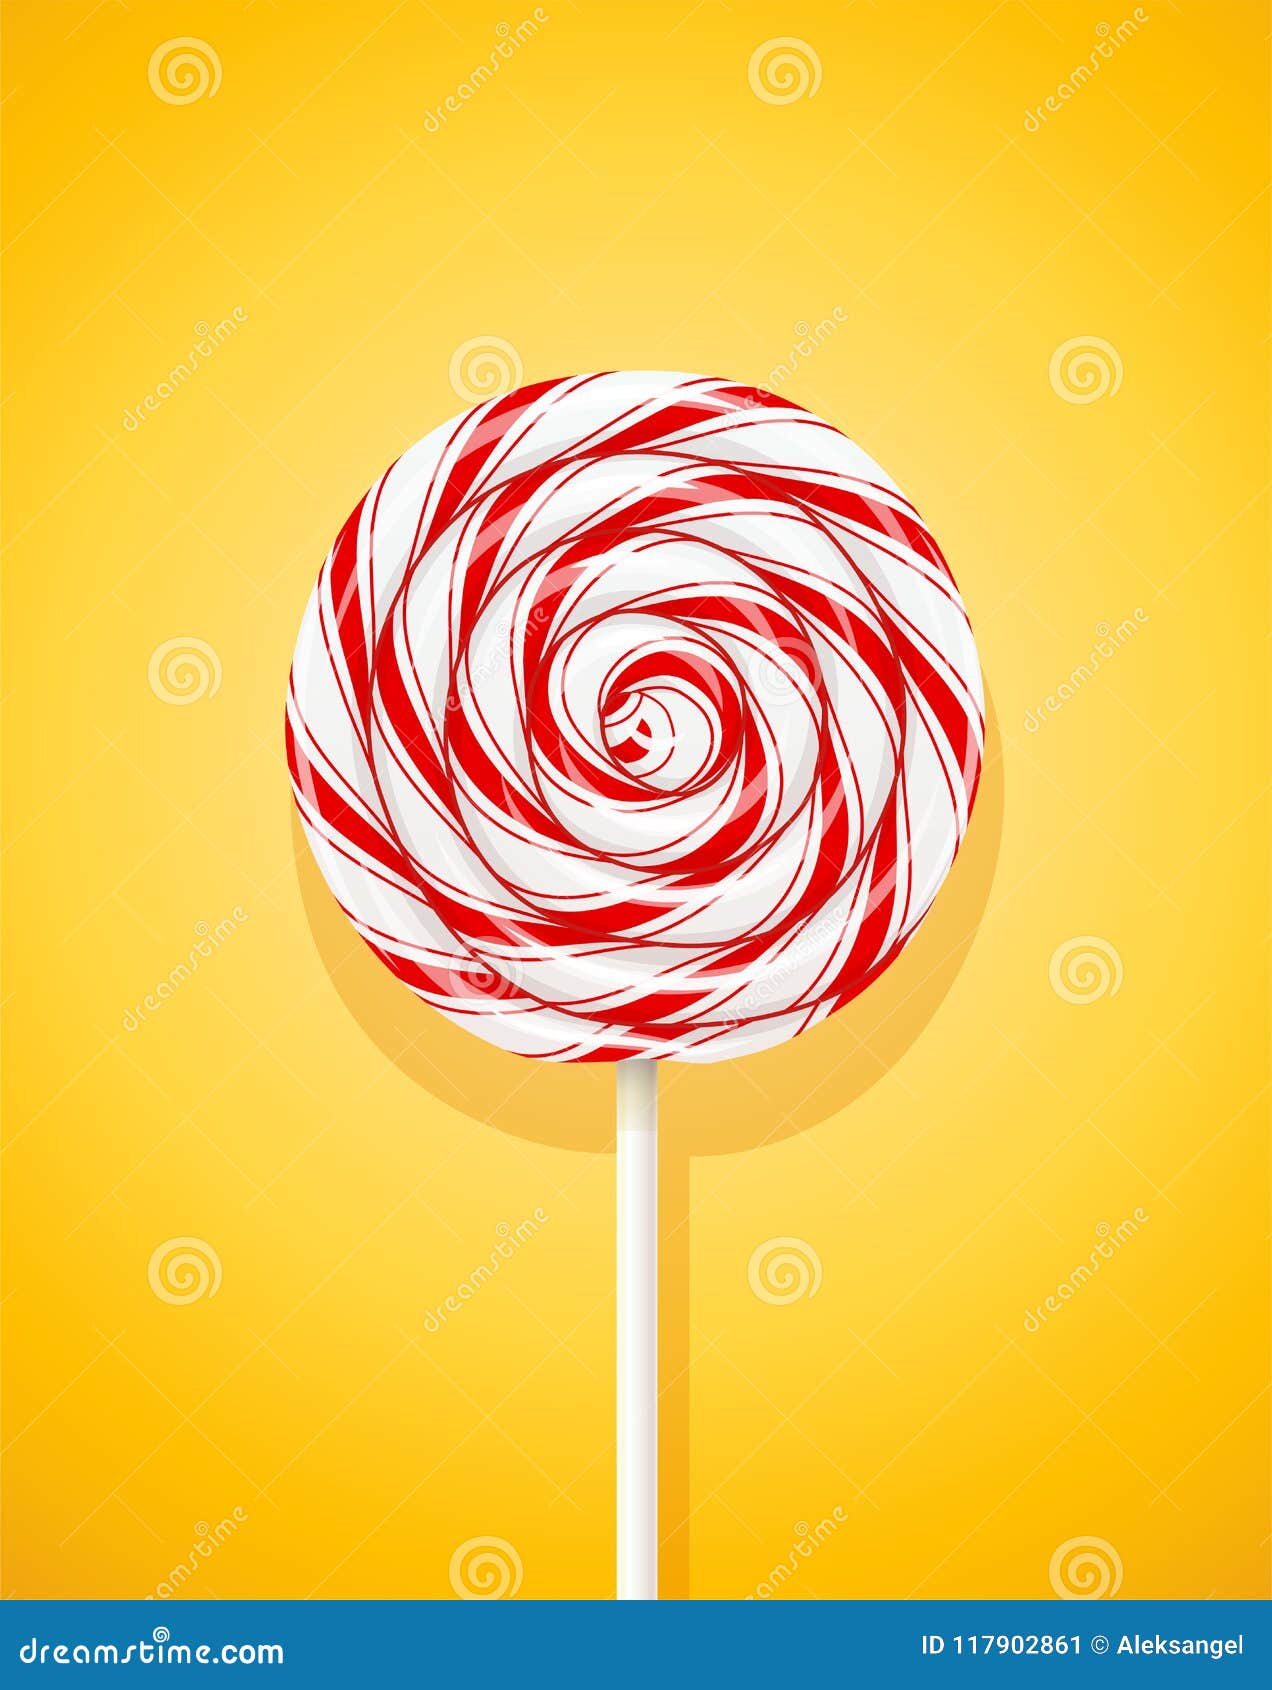 yummy lollipop at stick holiday sweetness yellow